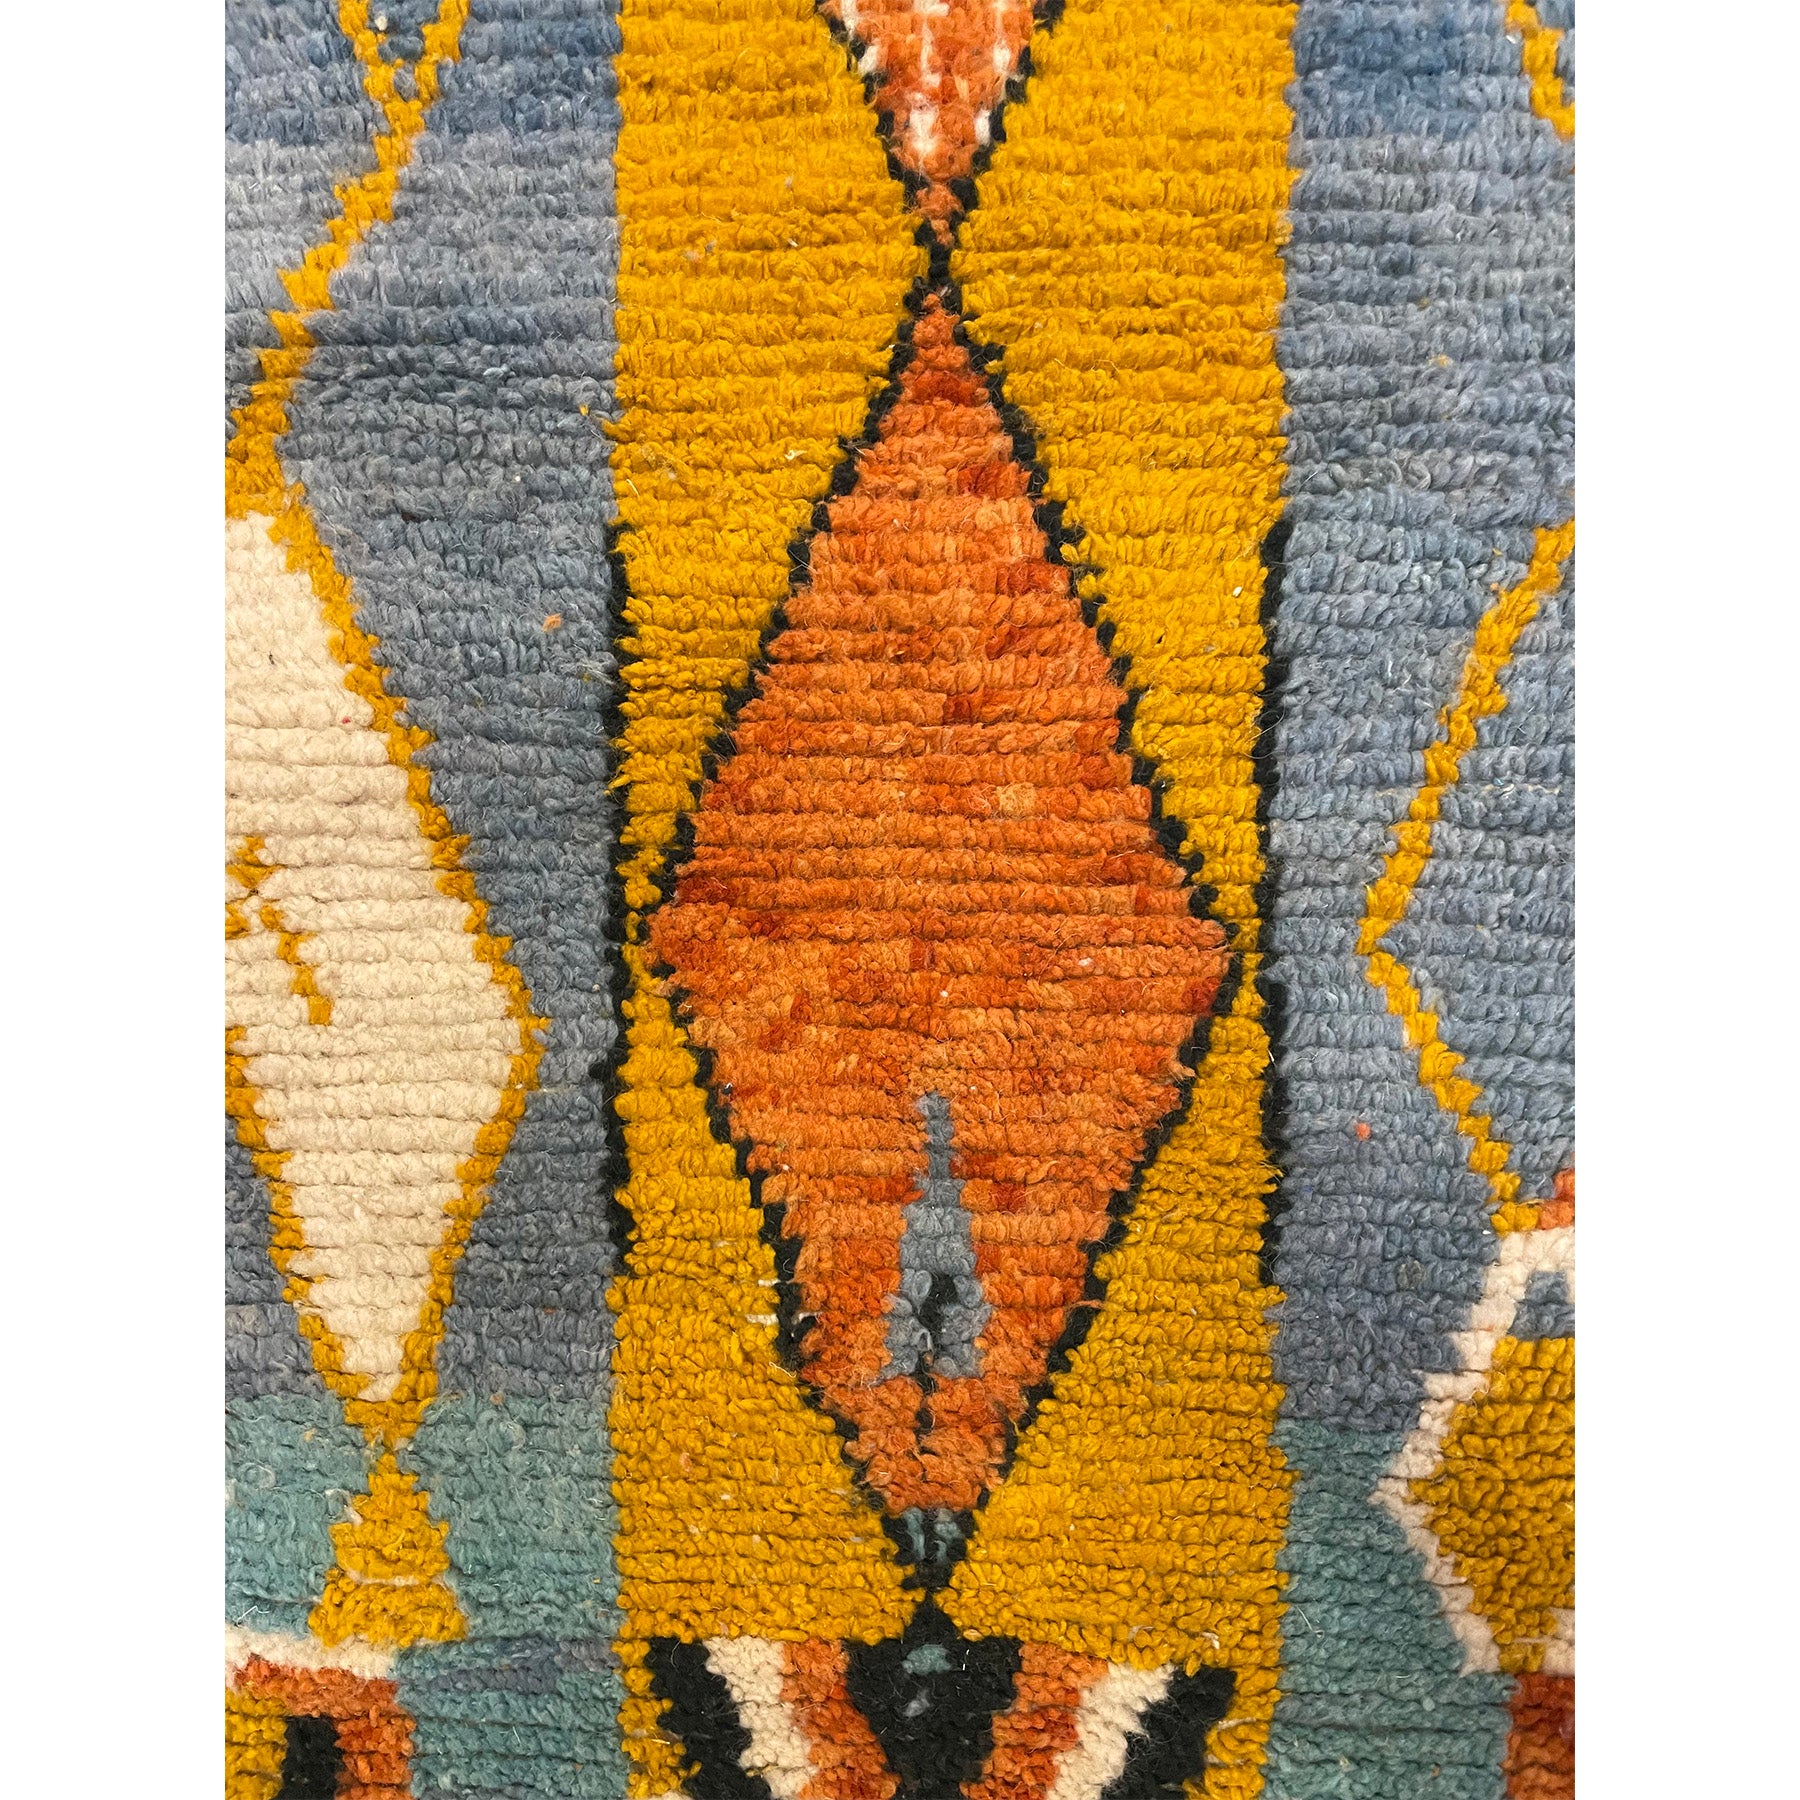 Handknotted yellow and blue Moroccan berber runner rug - Kantara | Moroccan Rugs